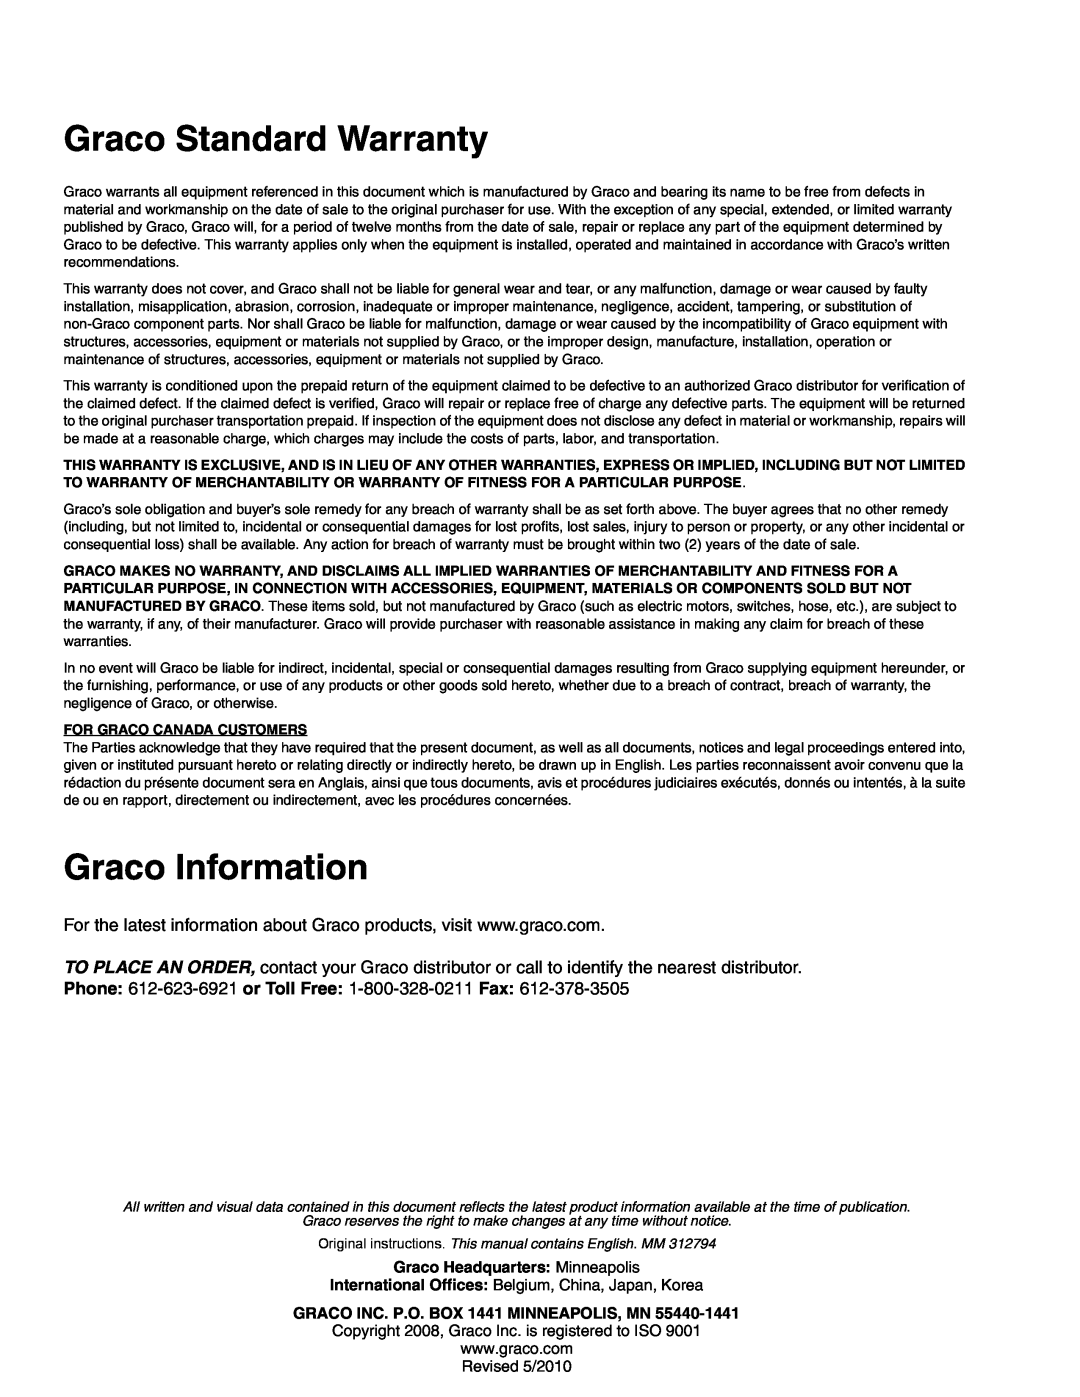 Graco 312794E important safety instructions Graco Standard Warranty, Graco Information, Graco Headquarters Minneapolis 